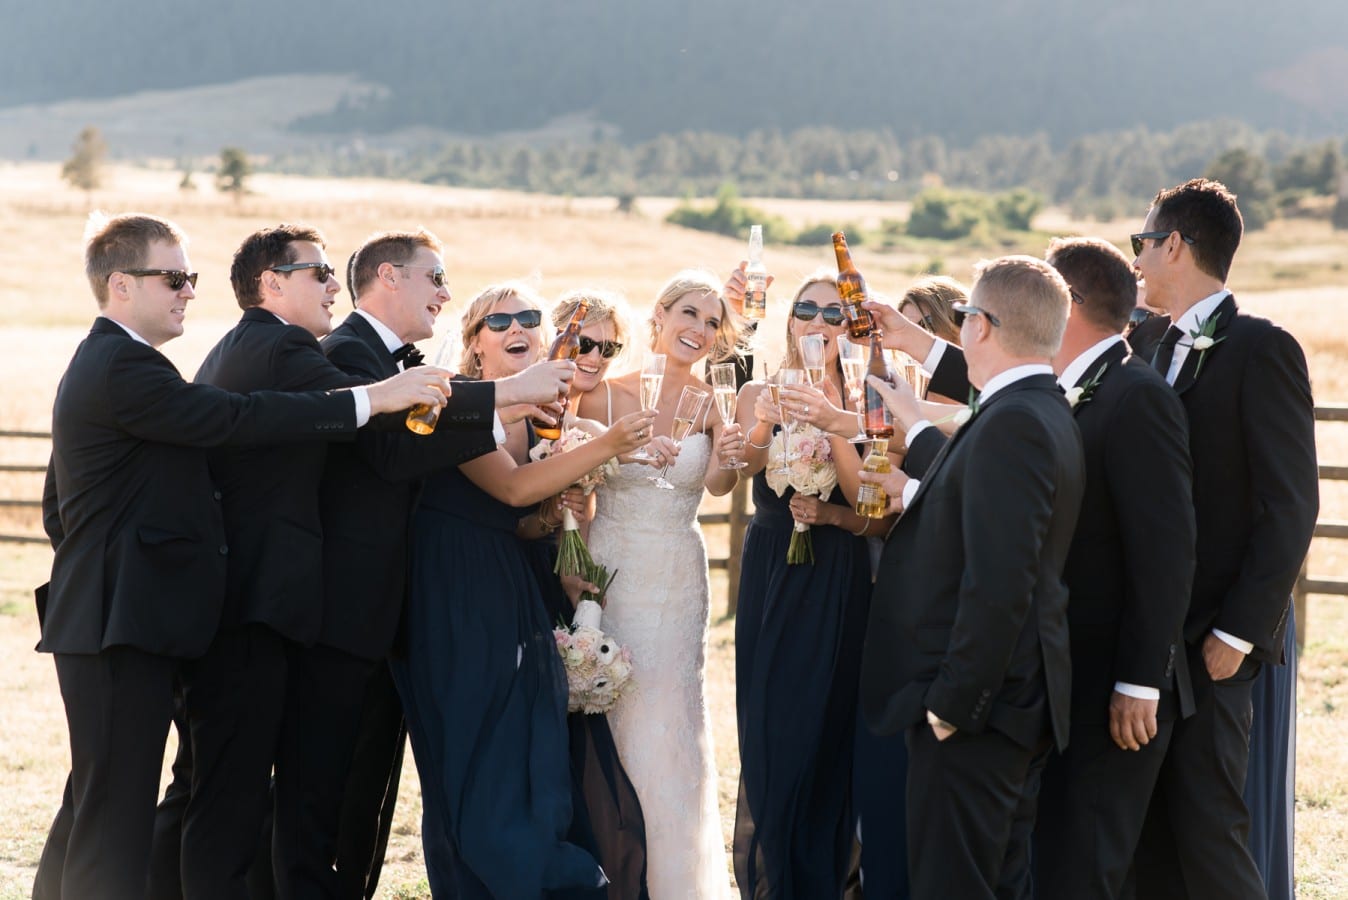 Spruce Mountain Ranch Wedding Photography | Larkspur, Colorado wedding photographer | From the Hip